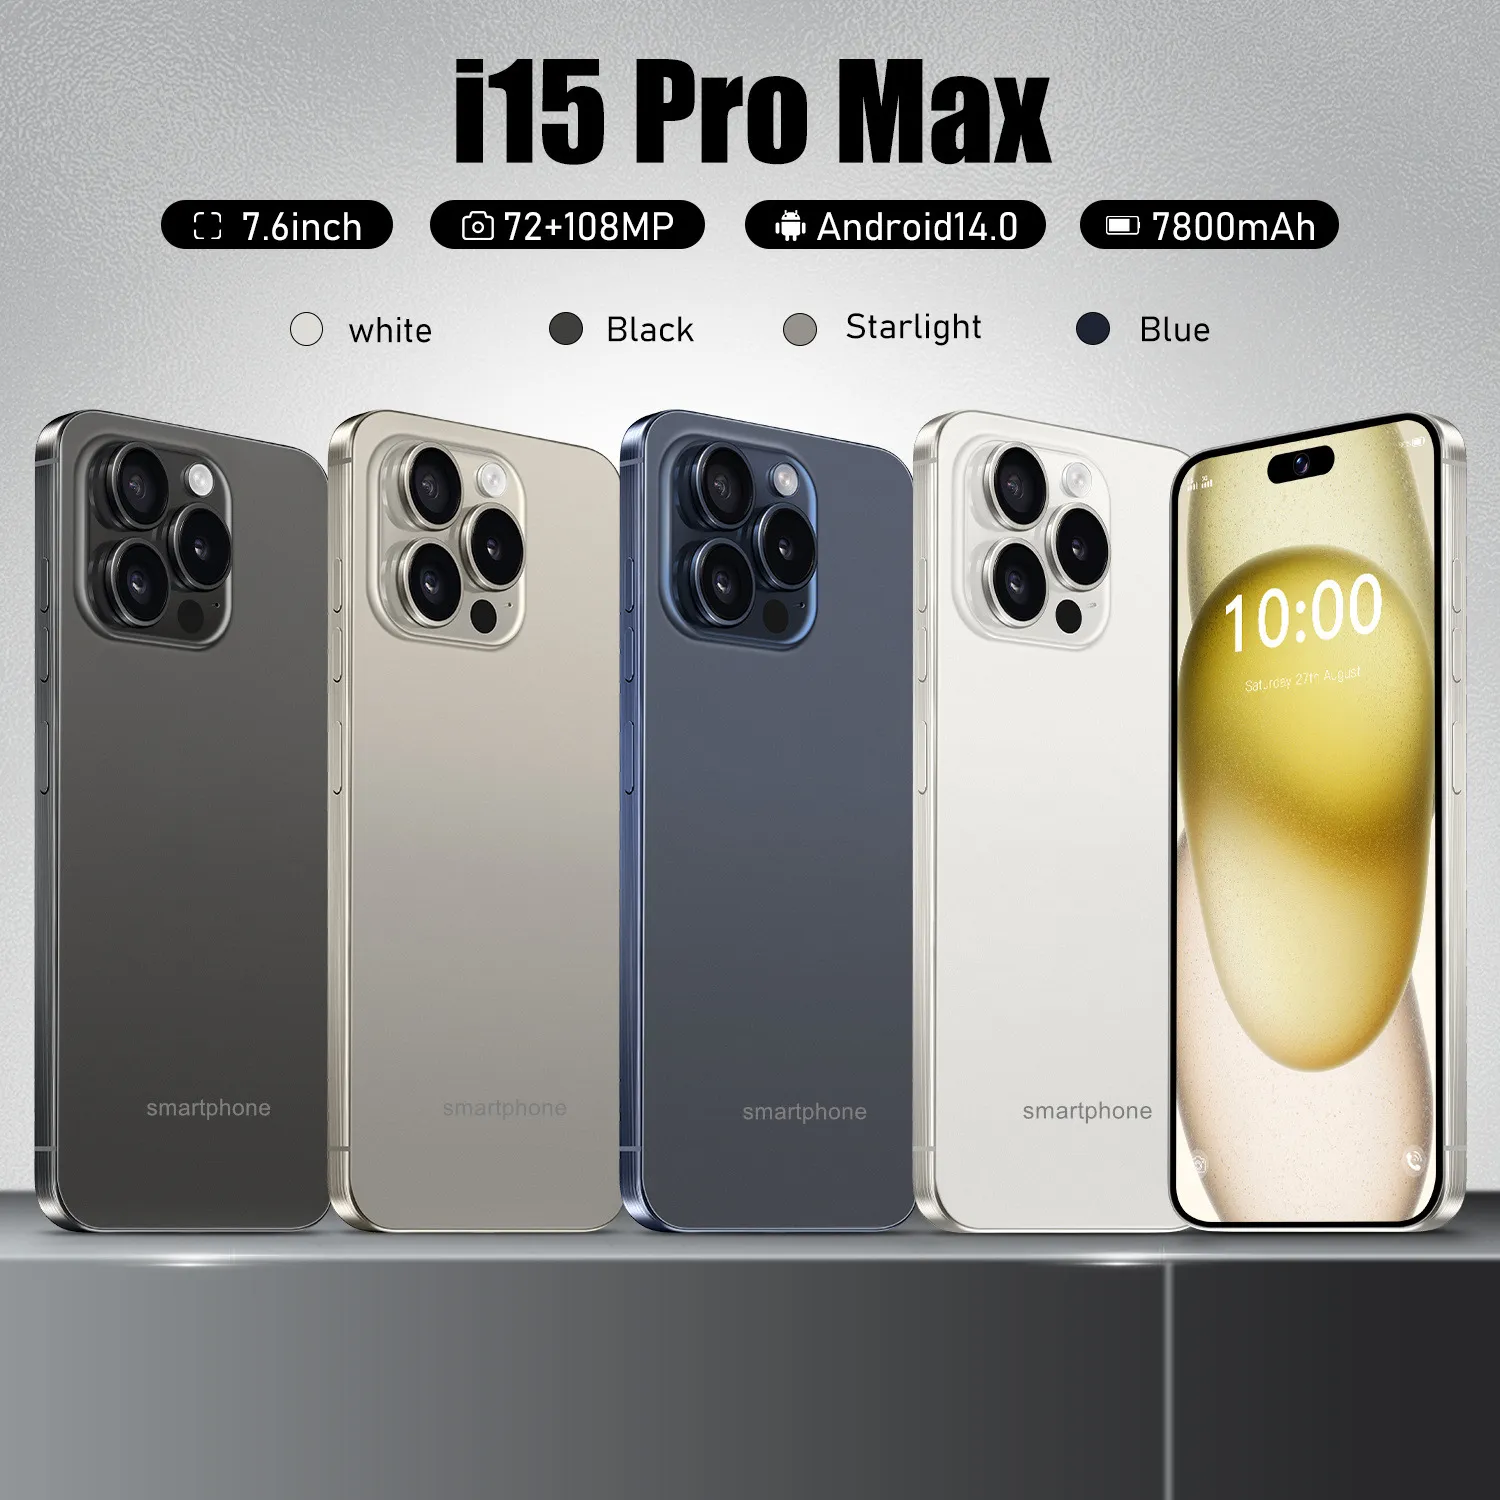 15 Pro Max Show 5G Mobilephone 64GB ROM мобильный телефон 6,8 -дюймовый протекал камера Bluetooth WiFi Wcdma Mobiephone с коробкой